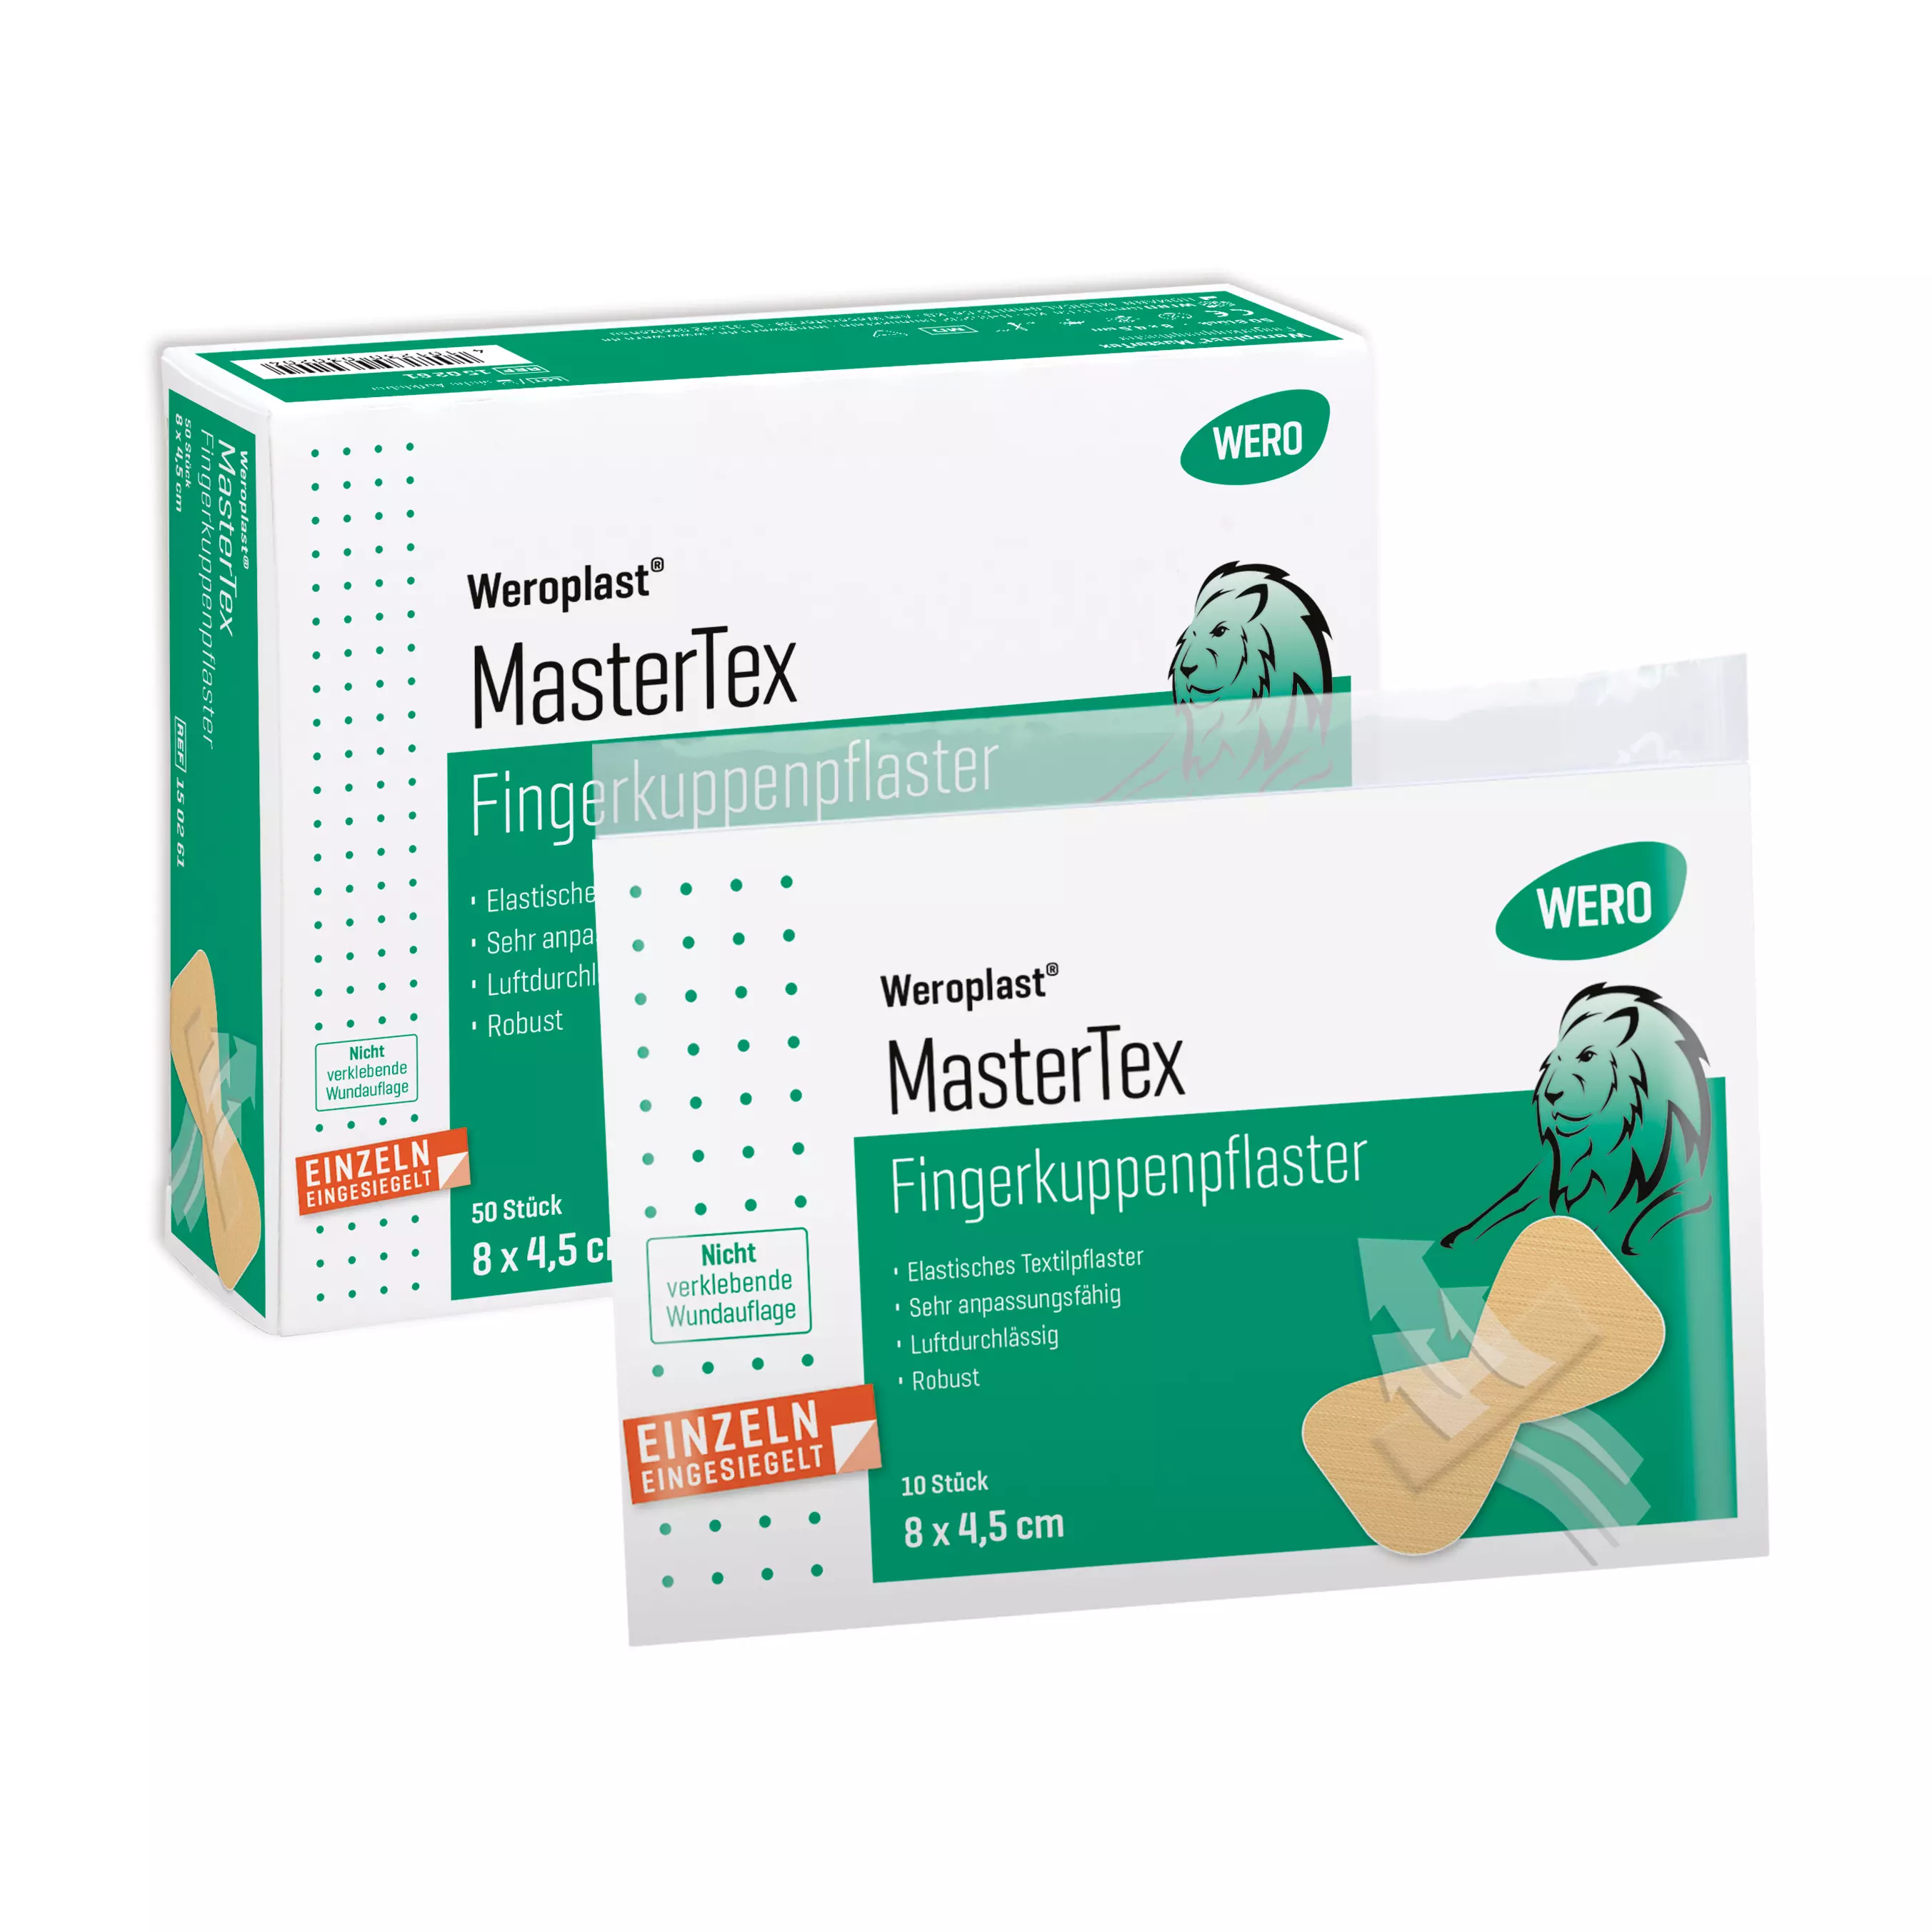 Weroplast® MasterTex fingertip plasters - 10 pcs